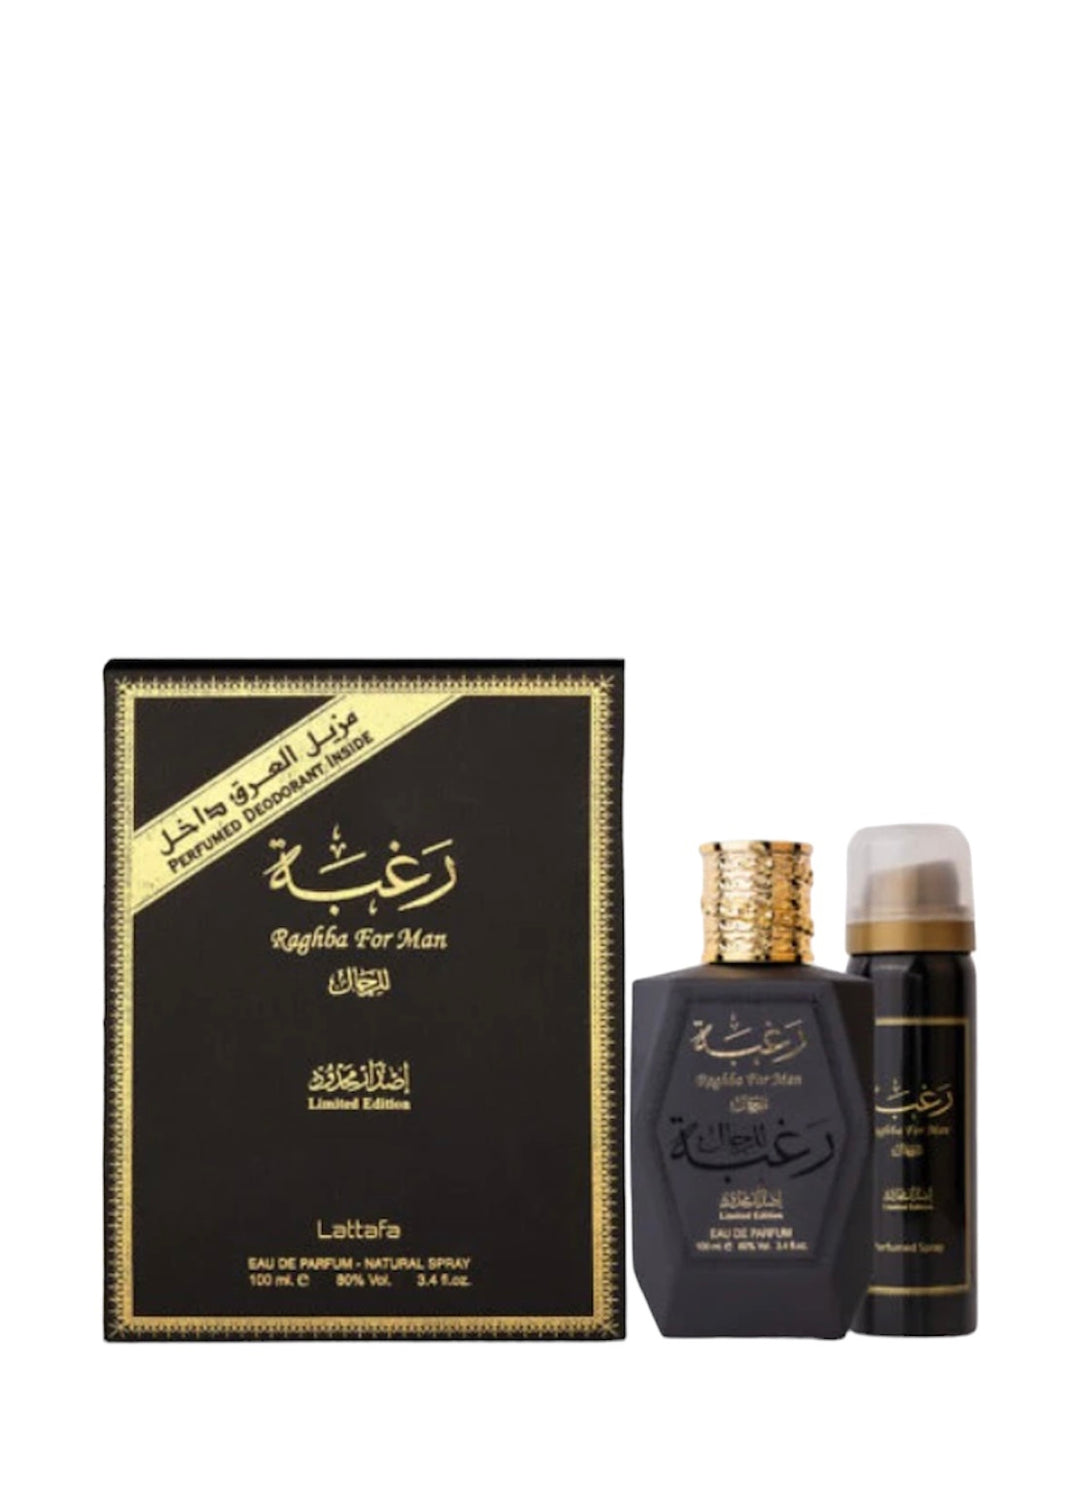 Perfumes Raghba For Men By Lattafa EDP 100ml Famous Fragrance + Deodorant Gift🥇